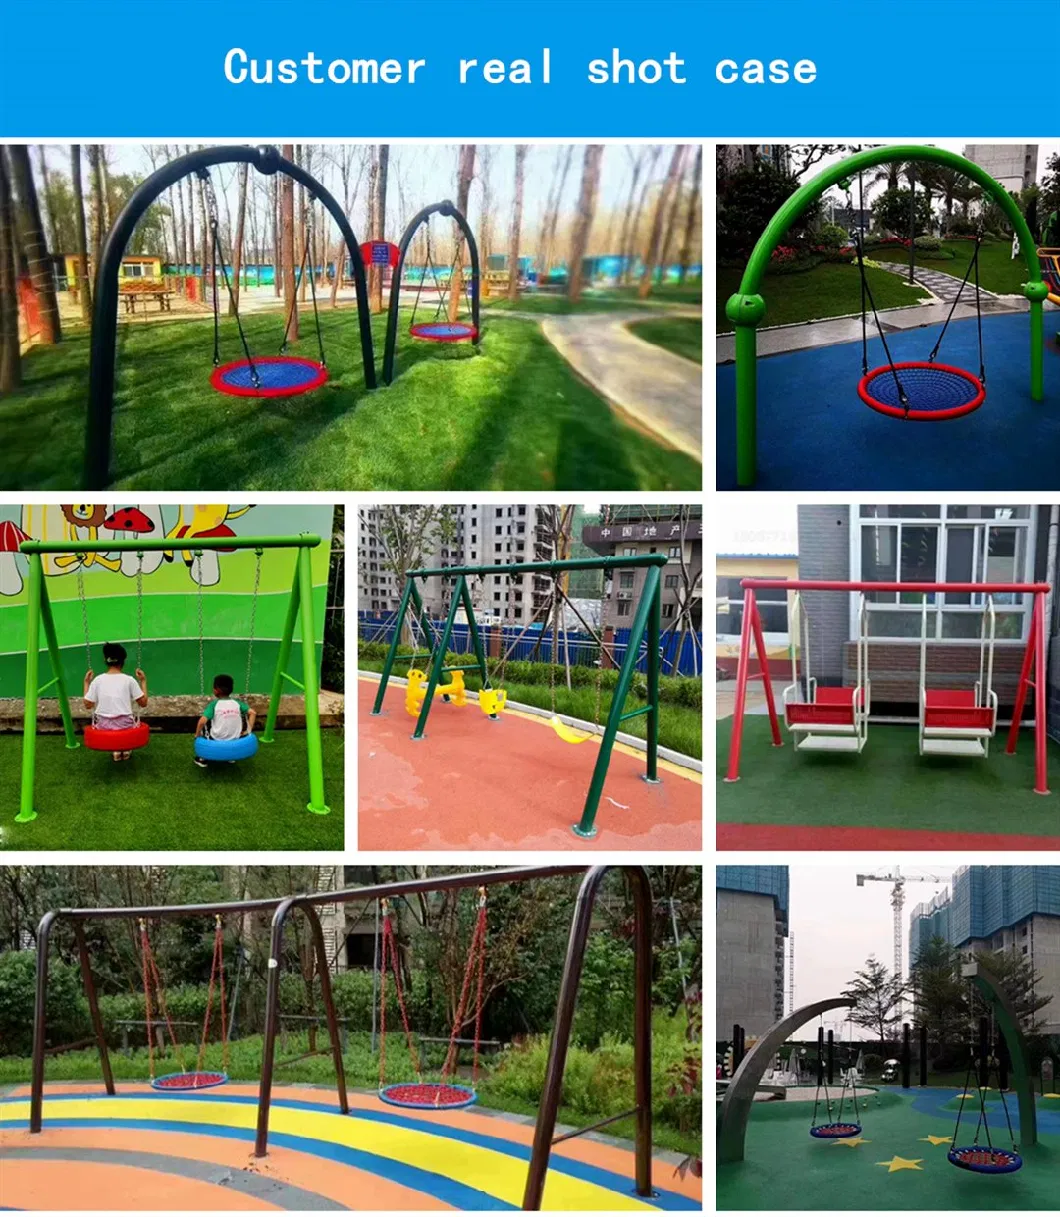 Kids Outdoor Playground Wooden Double Swing Set Park Equipment Yq92